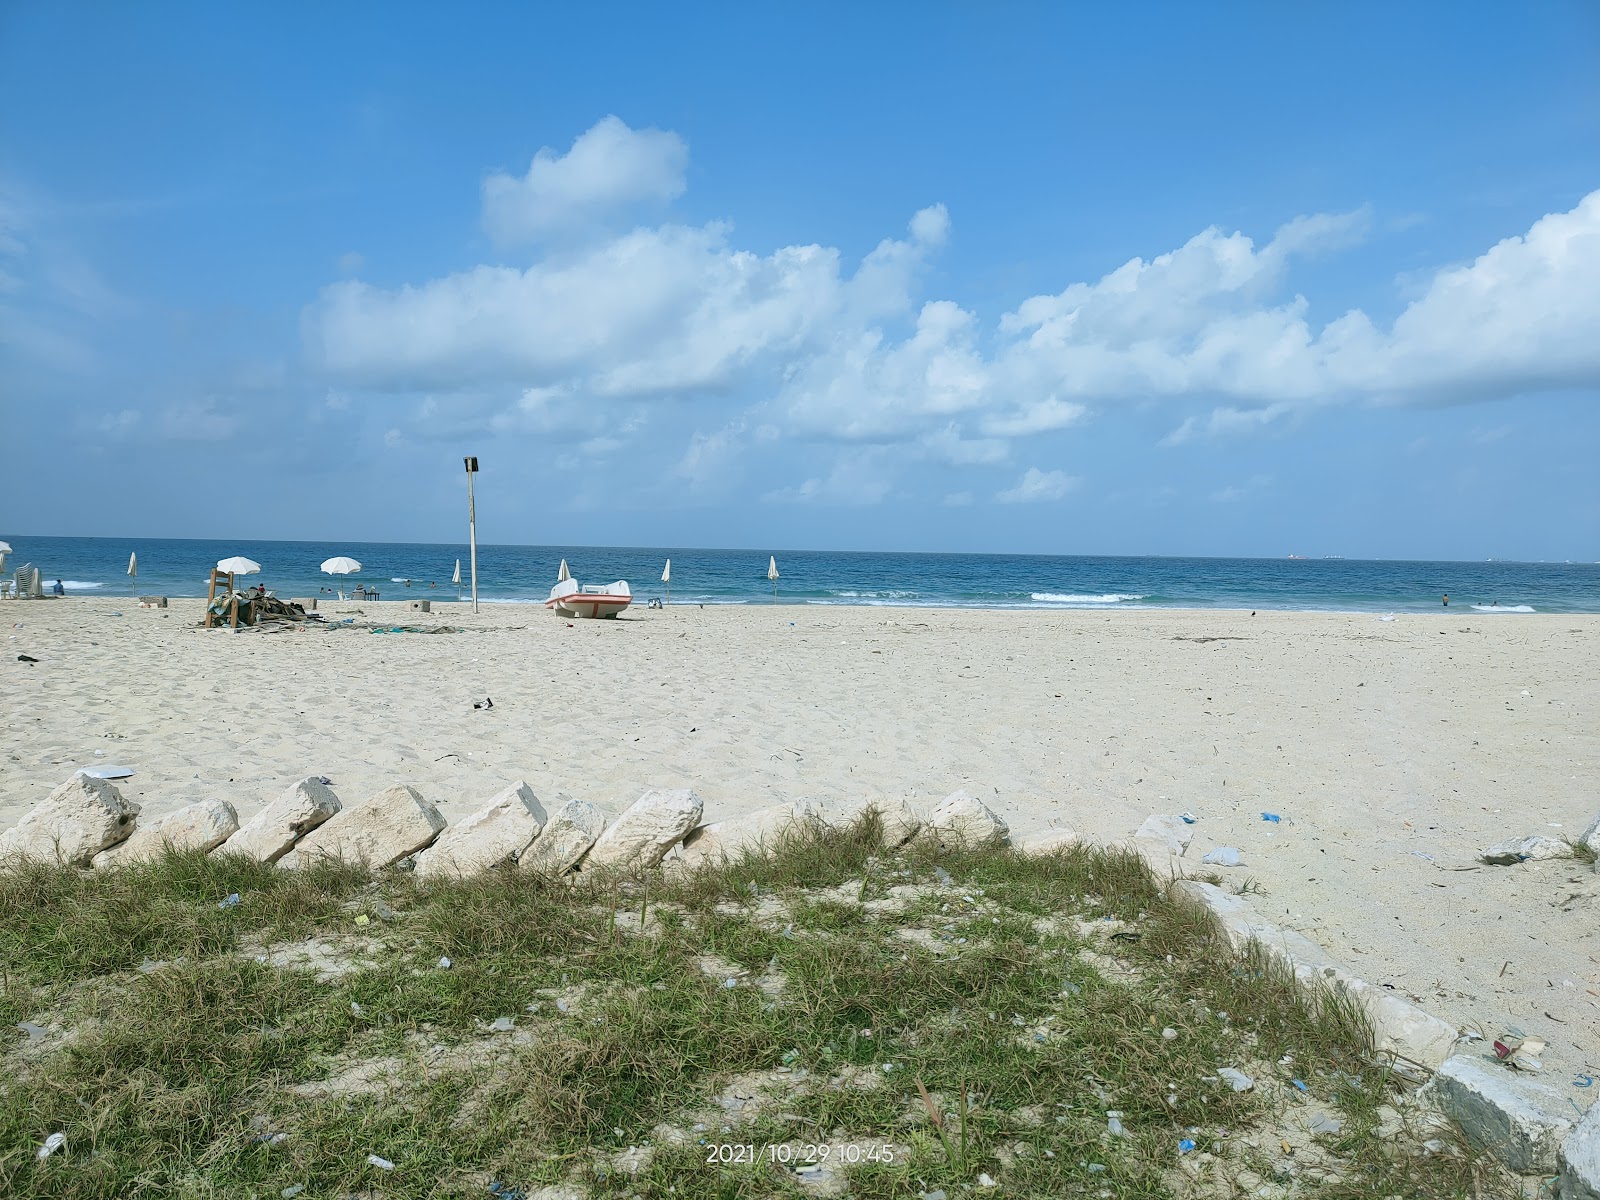 Photo of Hanouville Public Beach with long straight shore